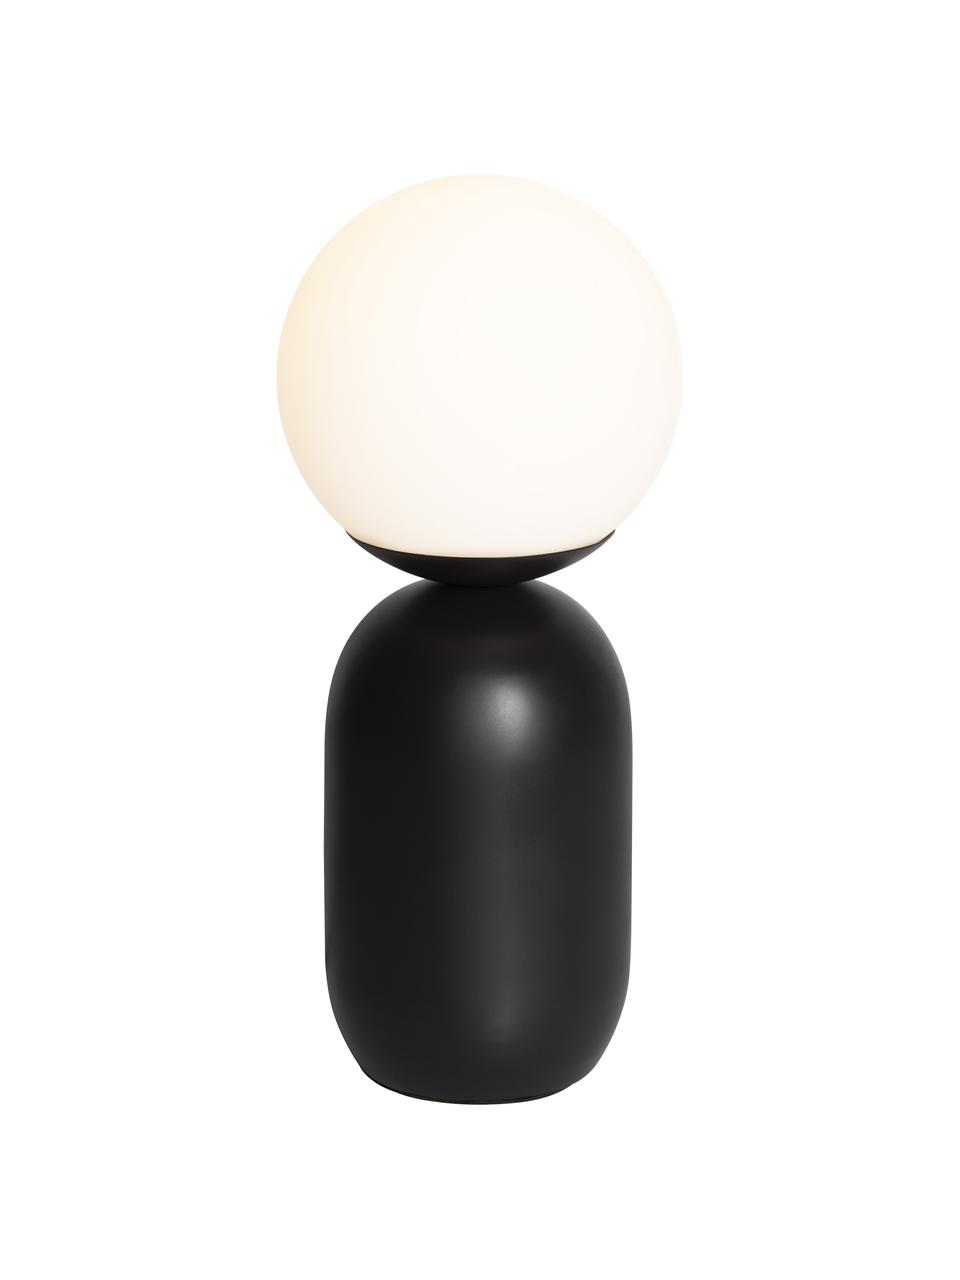 Kleine tafellamp Notti in zwart, Lampvoet: metaal, gecoat, Lampenkap: glas, moddergeblazen, Zwart, wit, Ø 15 x H 35 cm